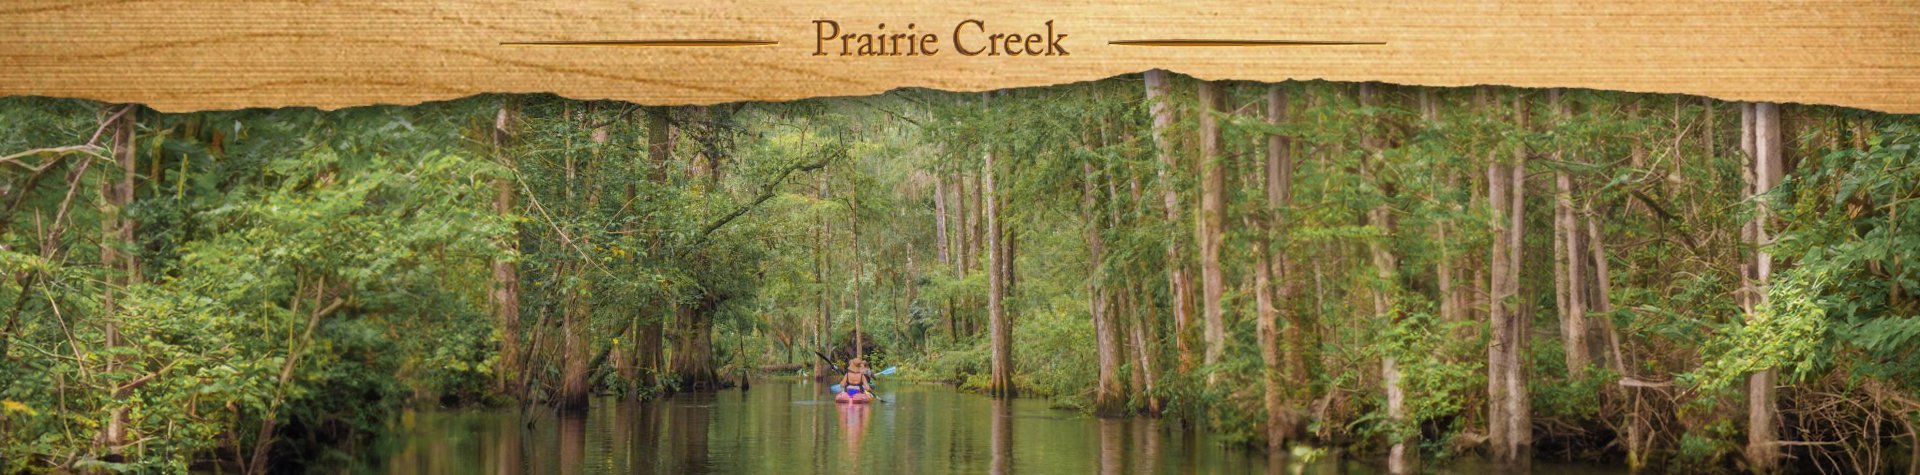 Prairie Creek – Jan 2019